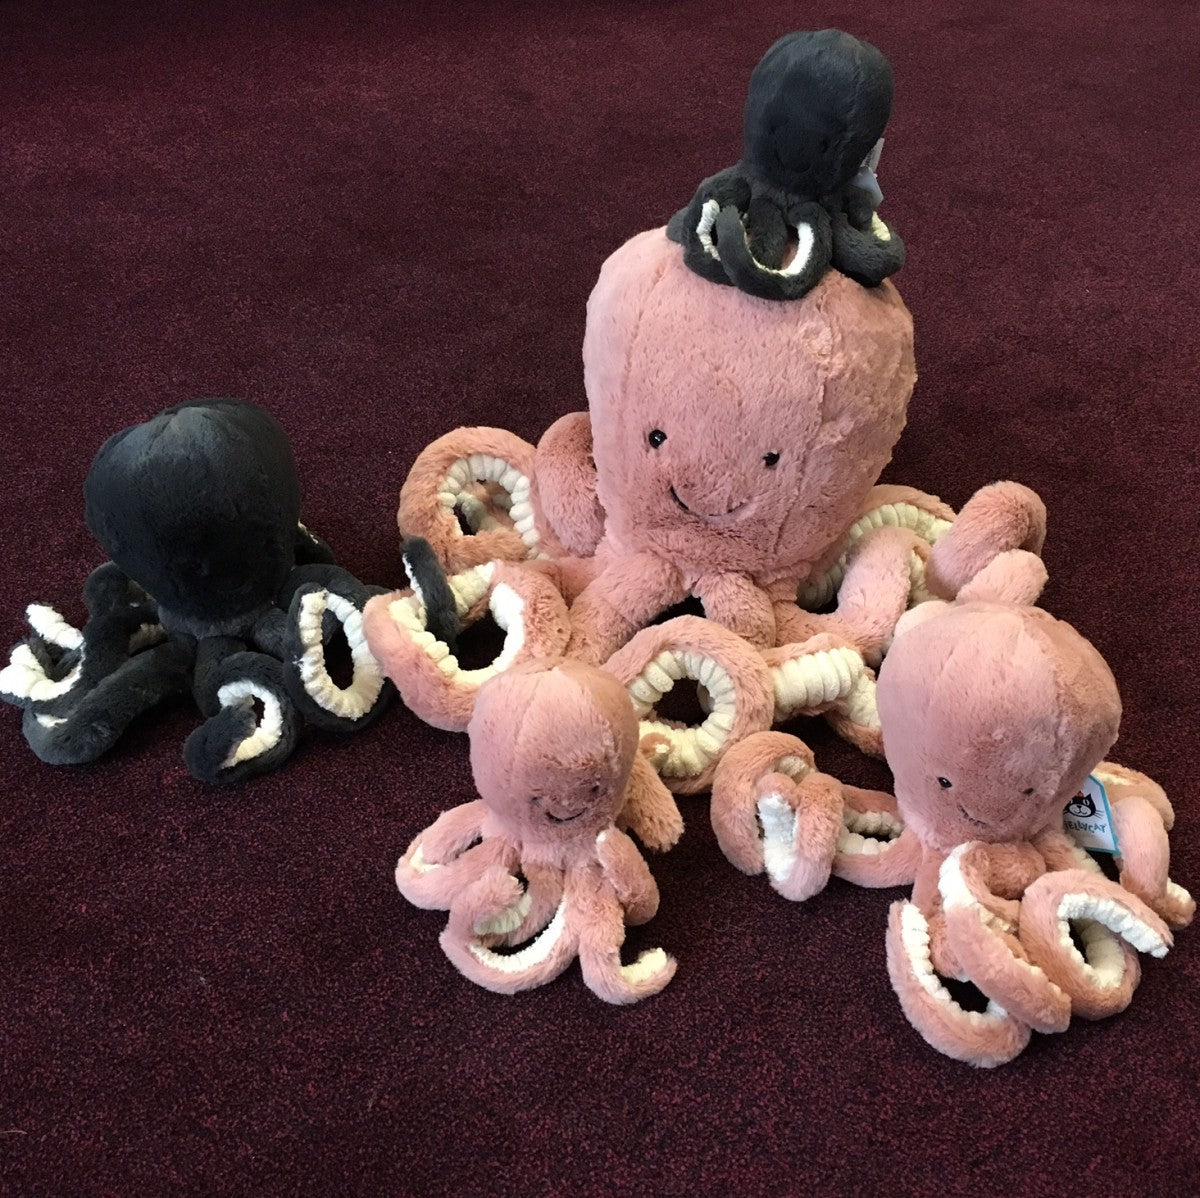 jellycat london octopus